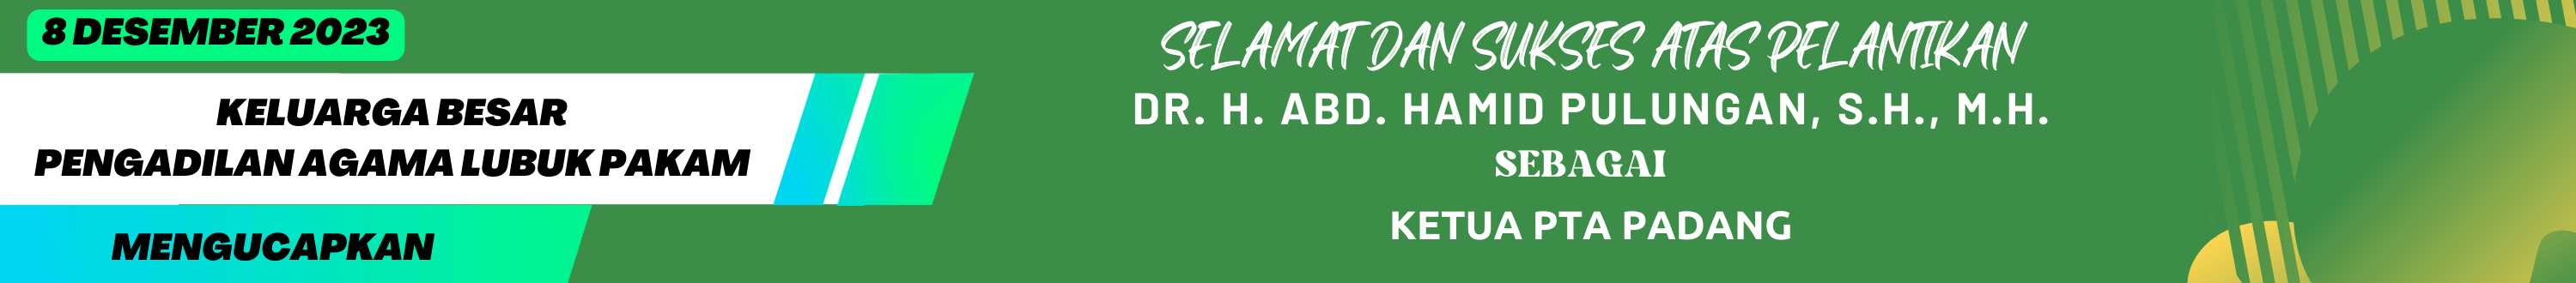 2_Ucapan_Selamat_dan_Sukses_Pak_KPTA_Padang.png